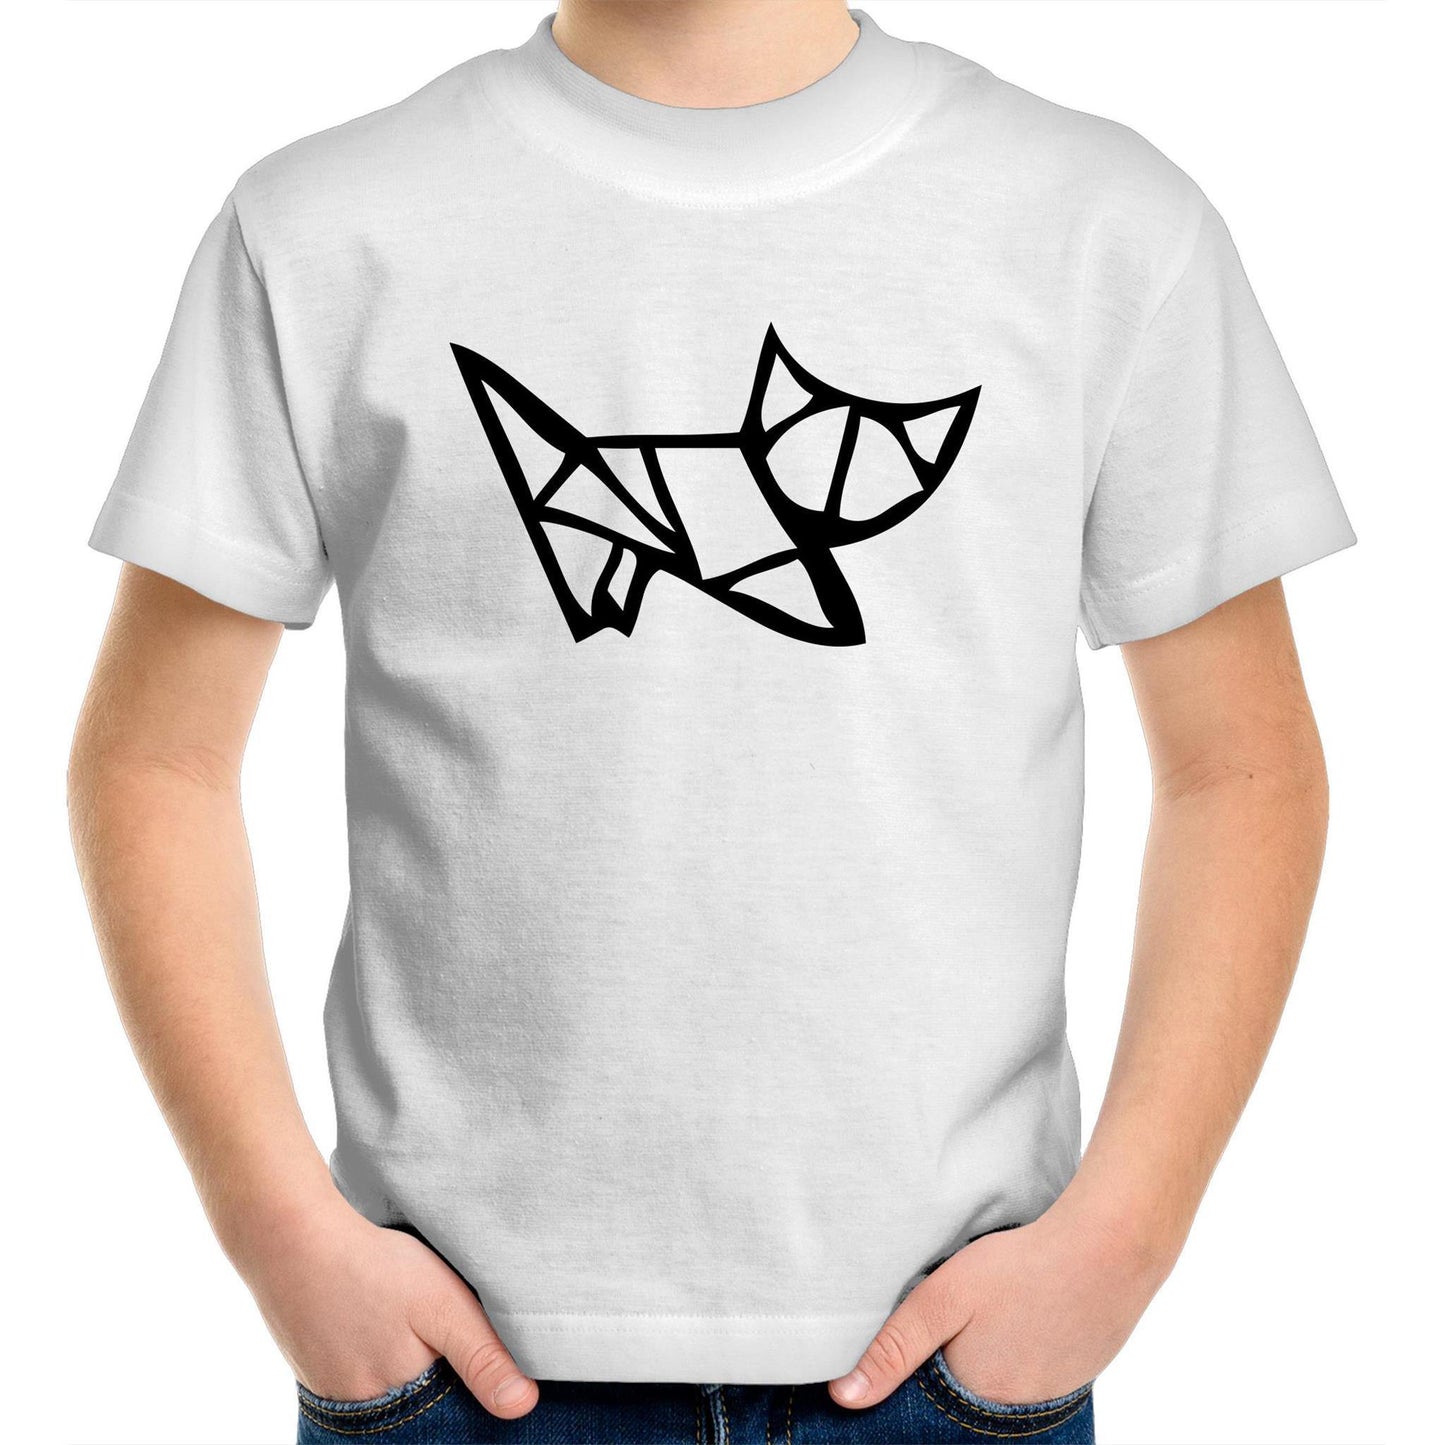 Origami Kitten - Kids Youth Crew T-Shirt White Kids Youth T-shirt animal